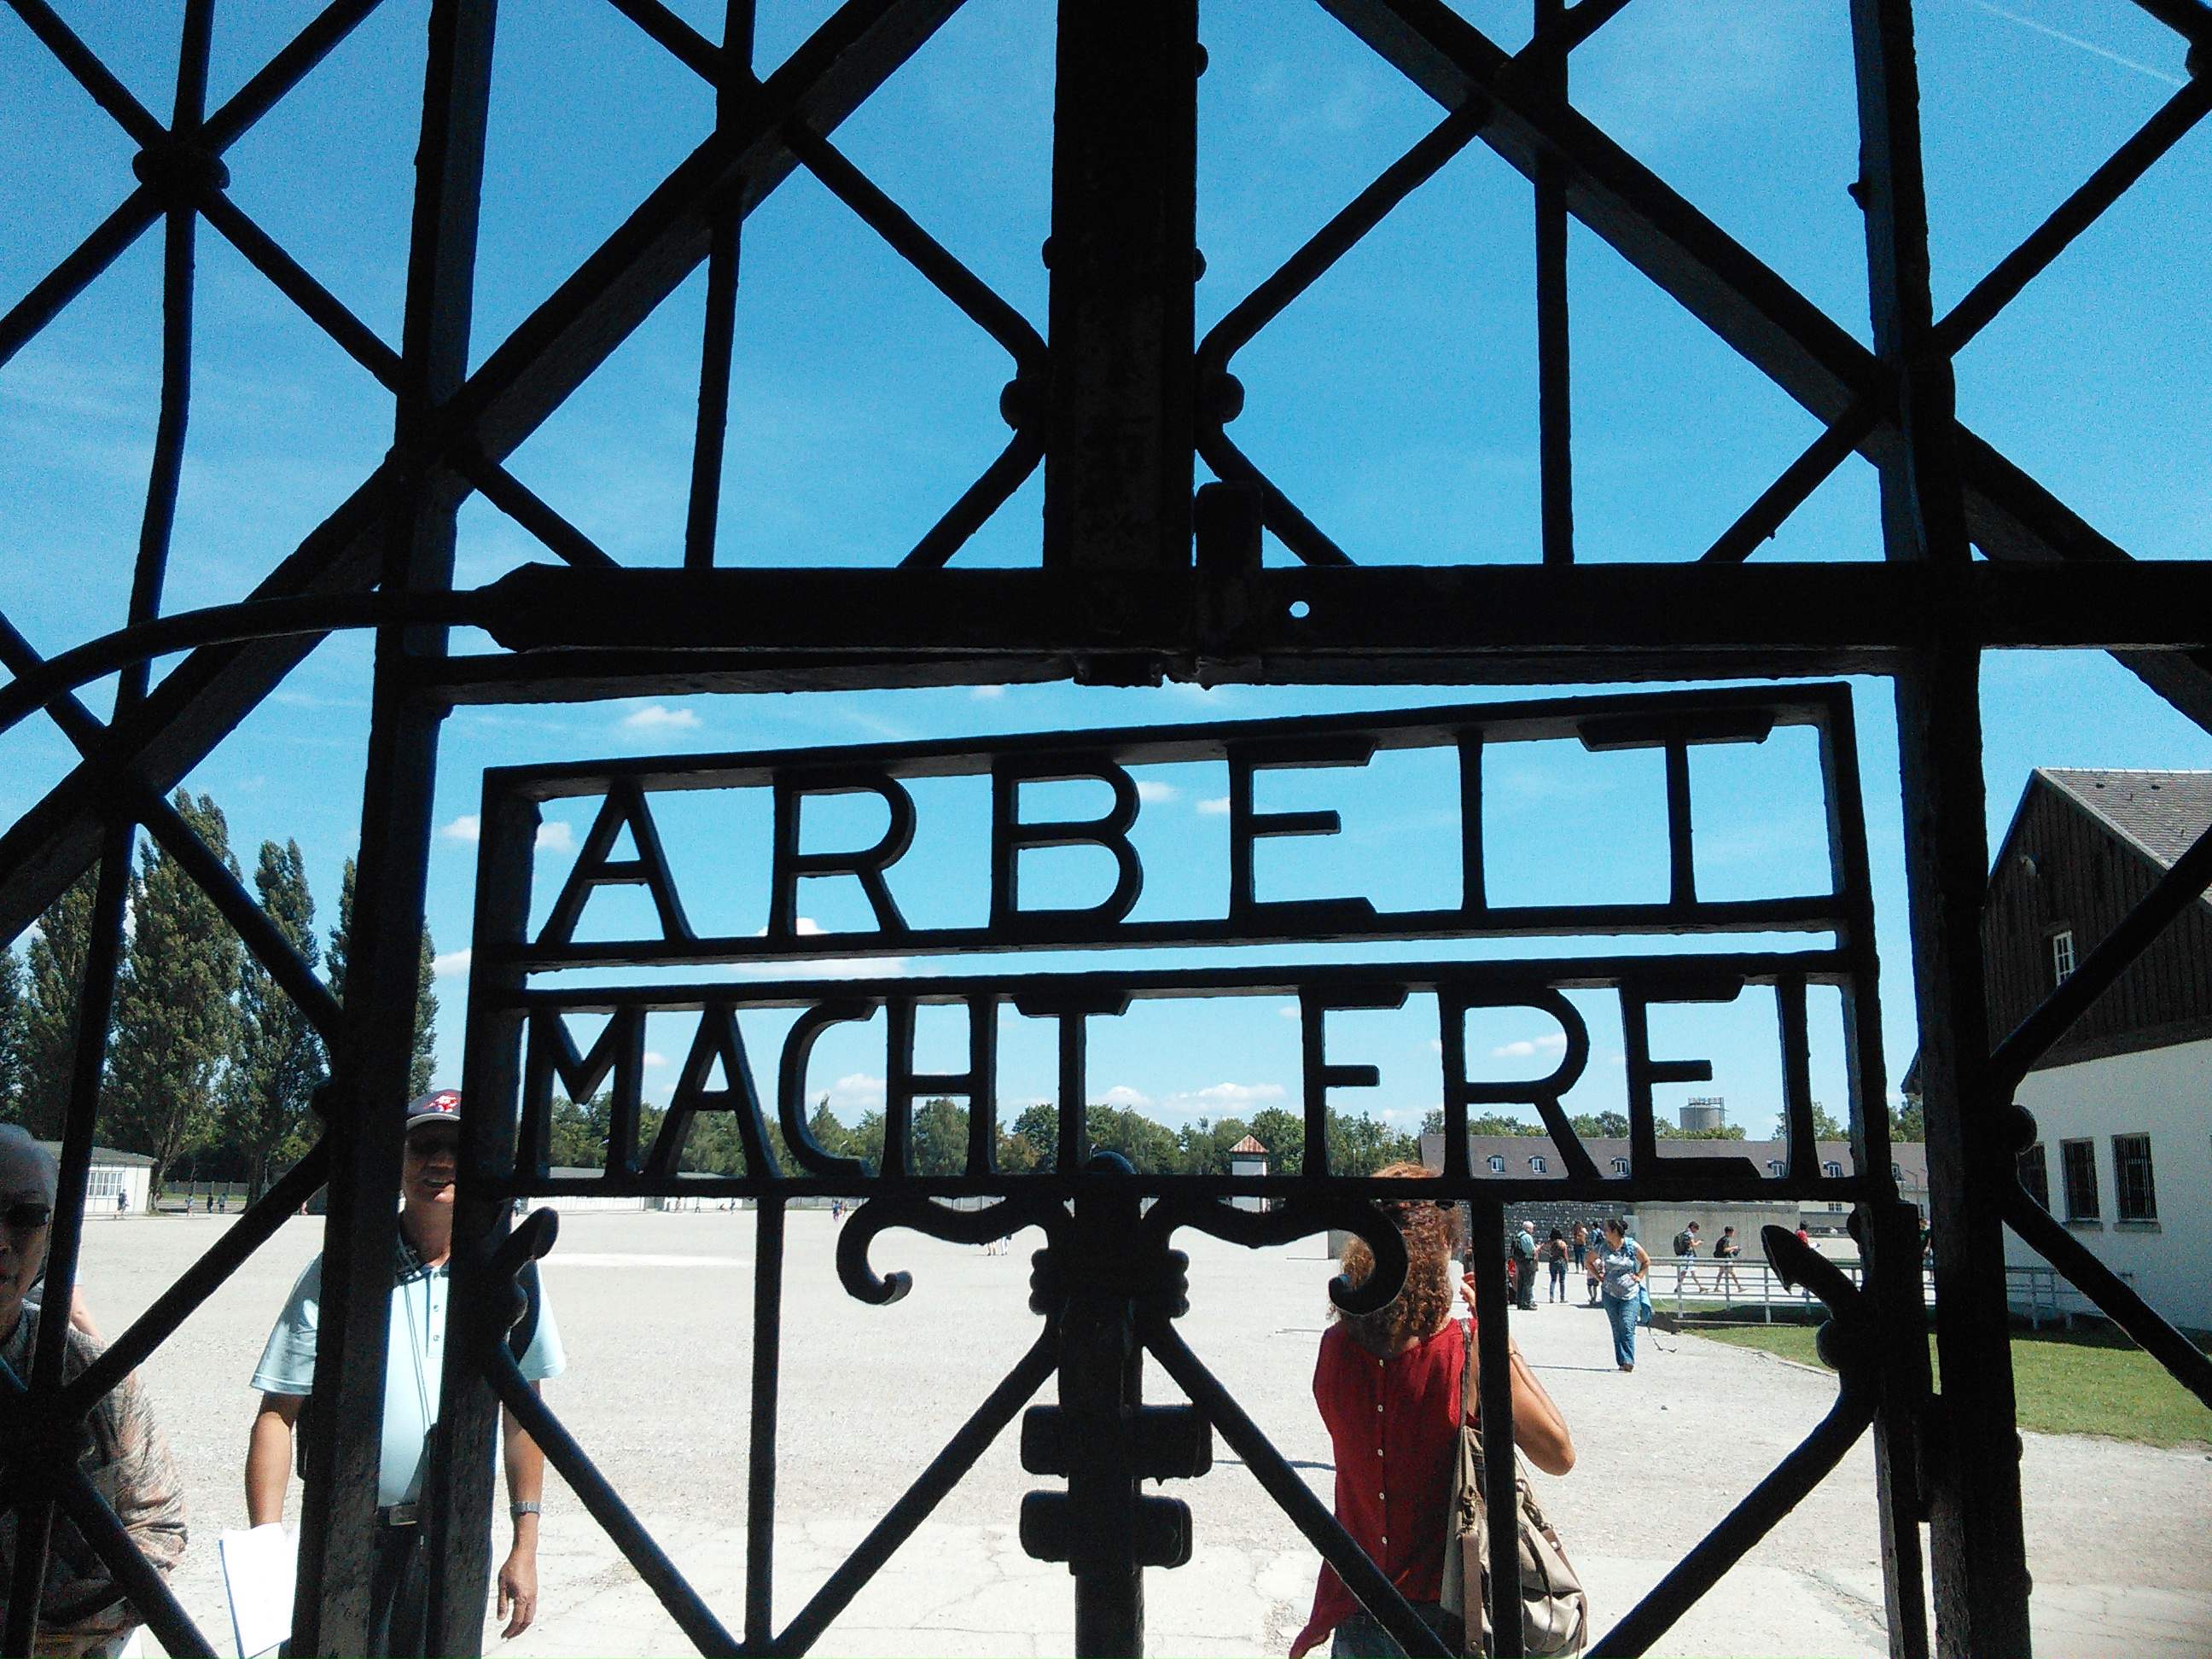 Dachau gate - Work Makes Freedom